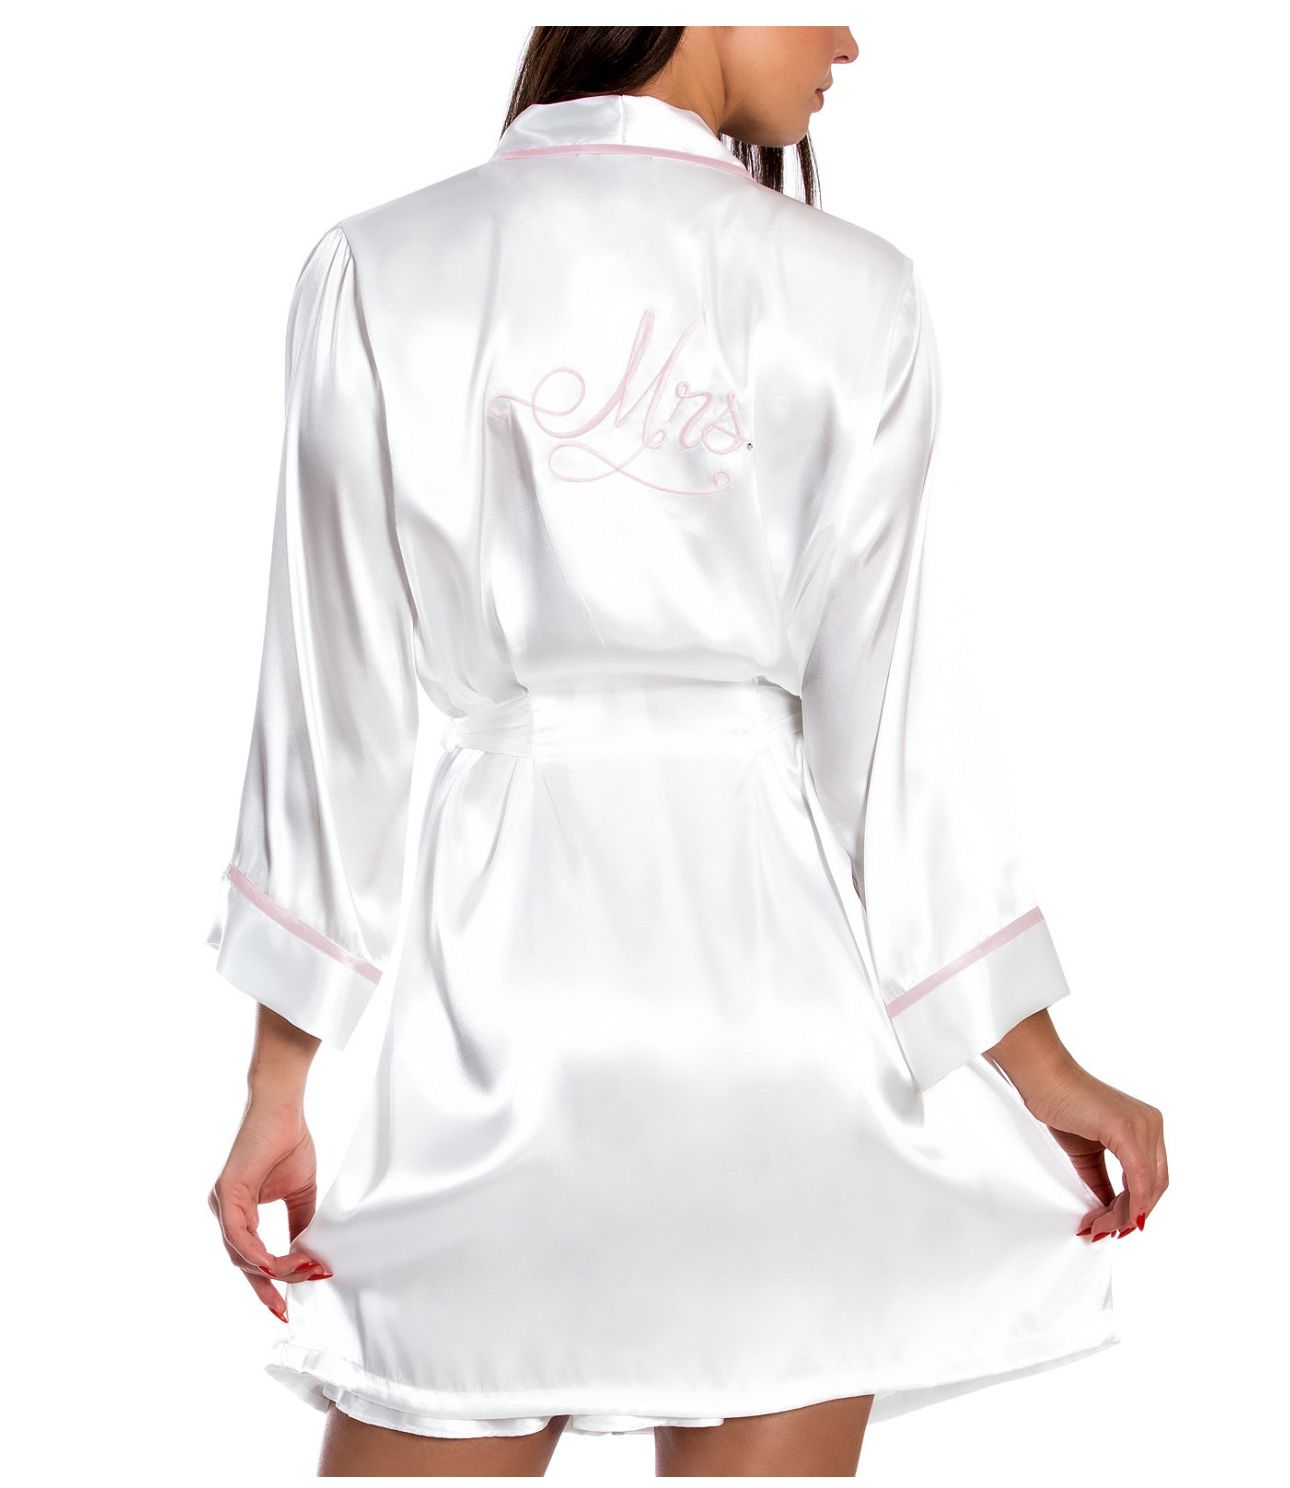 'Mrs' Satin Wrap Bridal Robe, Chemise Nightgown Set - XL